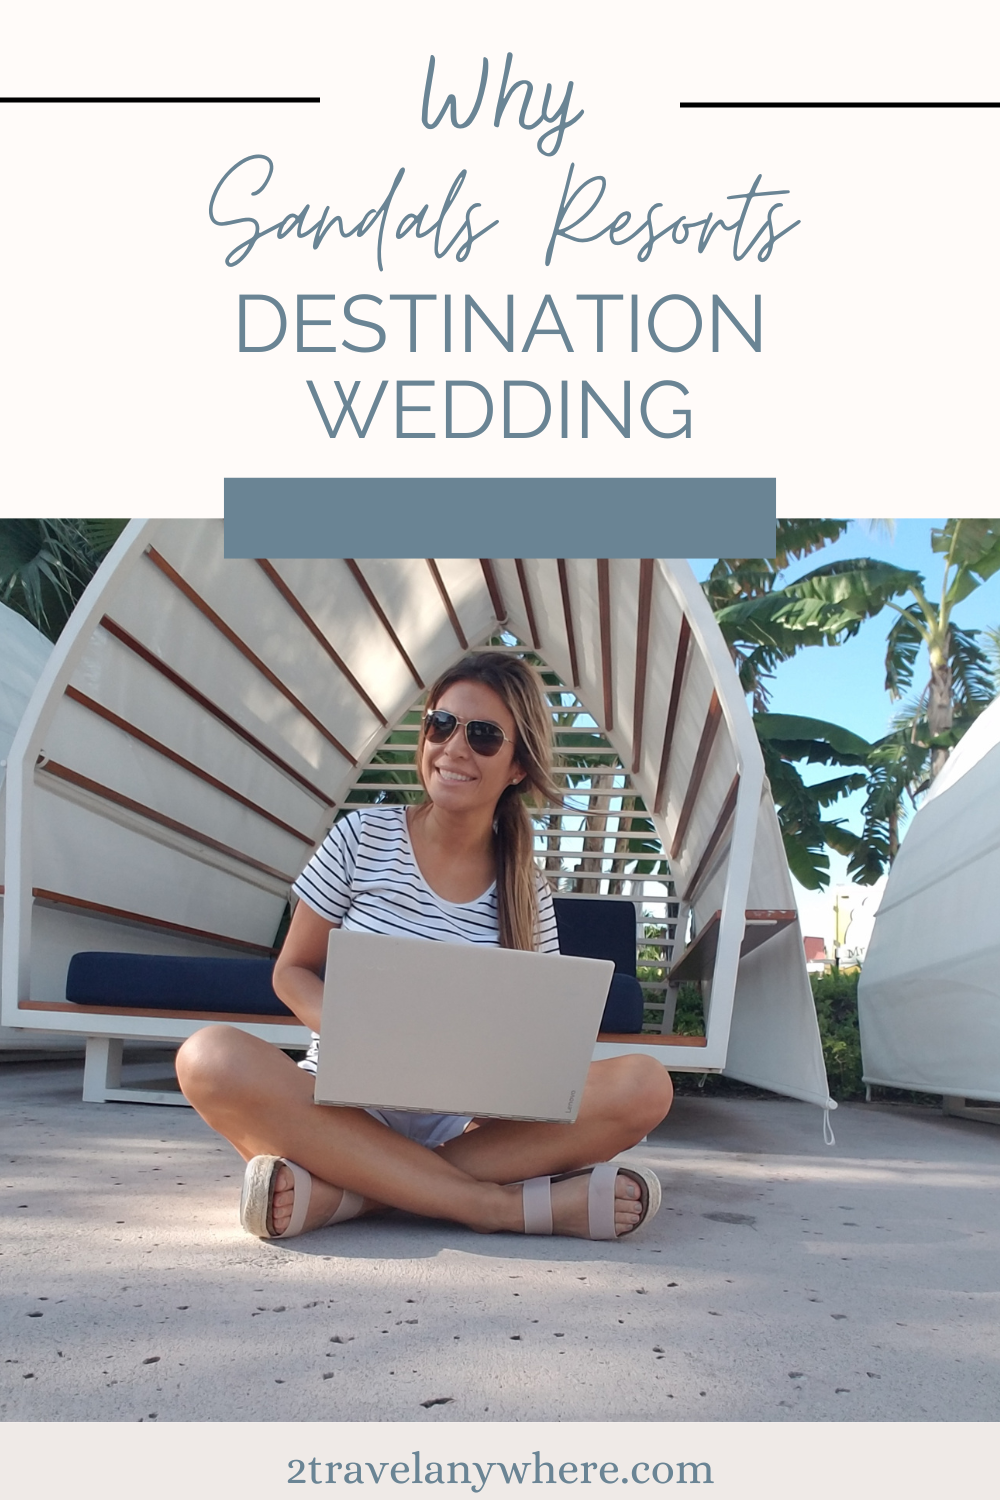 Why have a destination wedding at Sandals Resort?